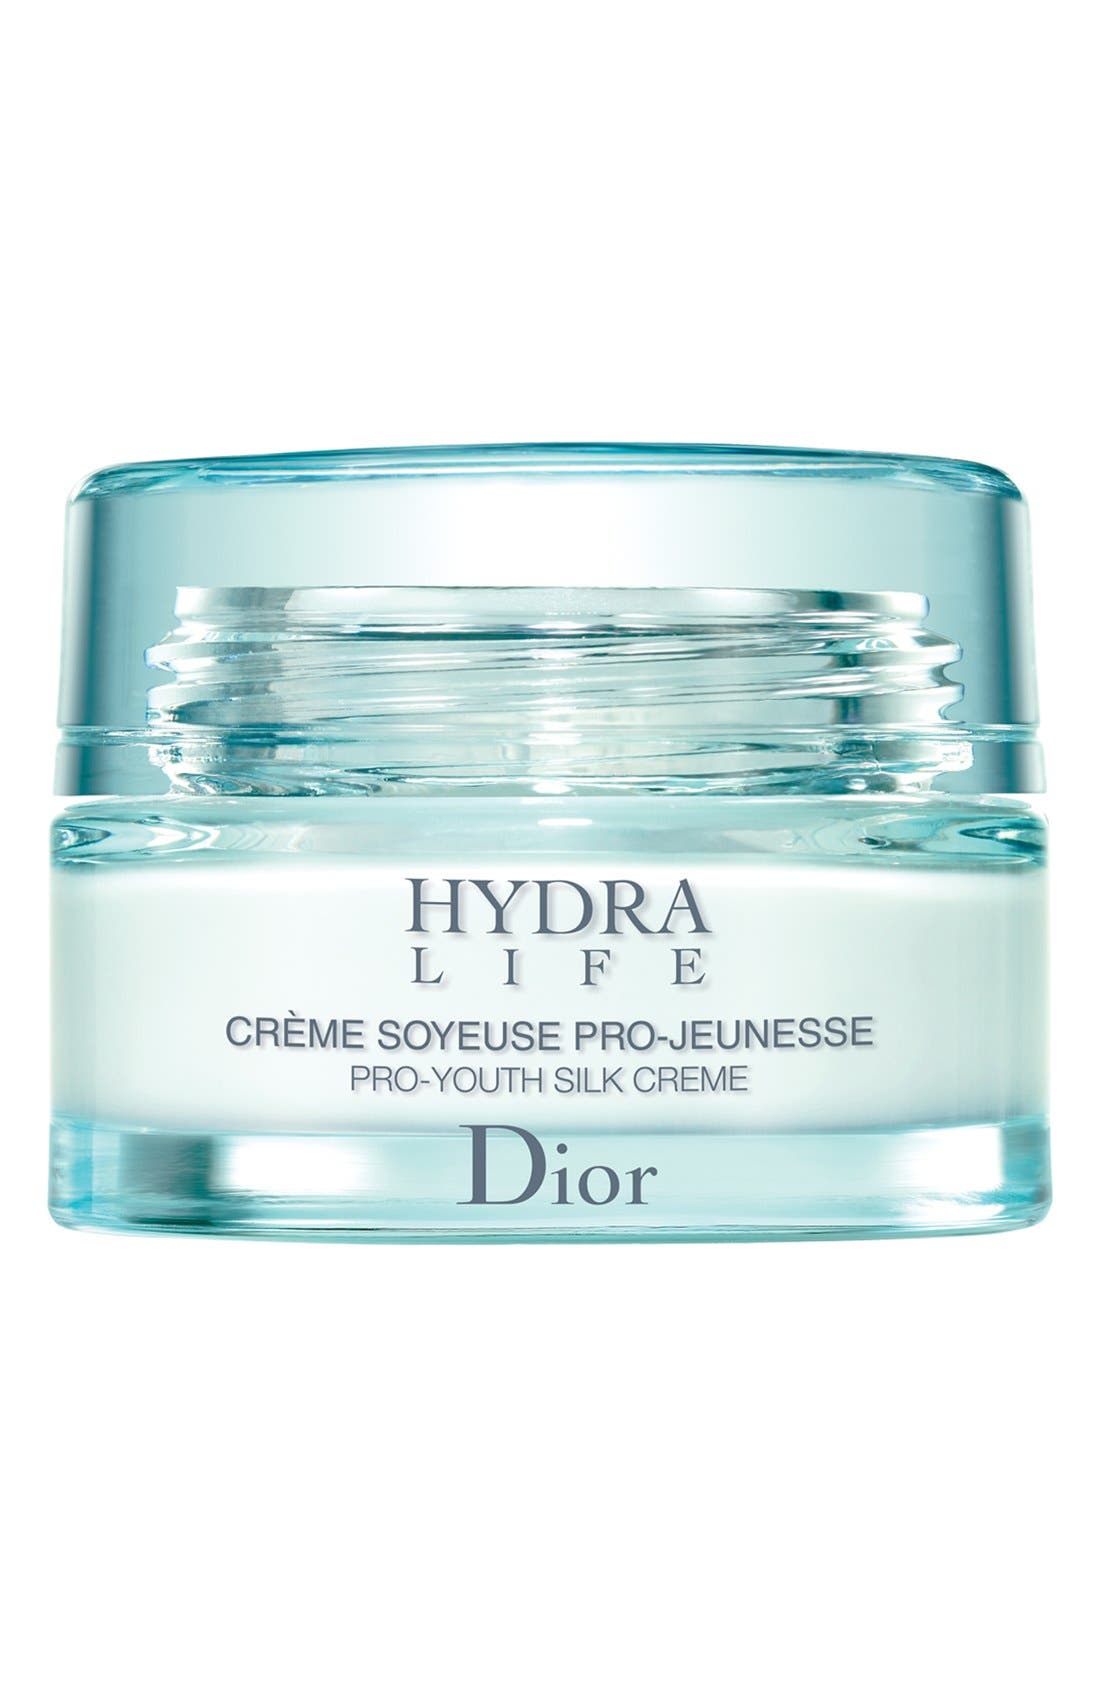 Dior 'Hydra Life' Pro-Youth Silk Crème 